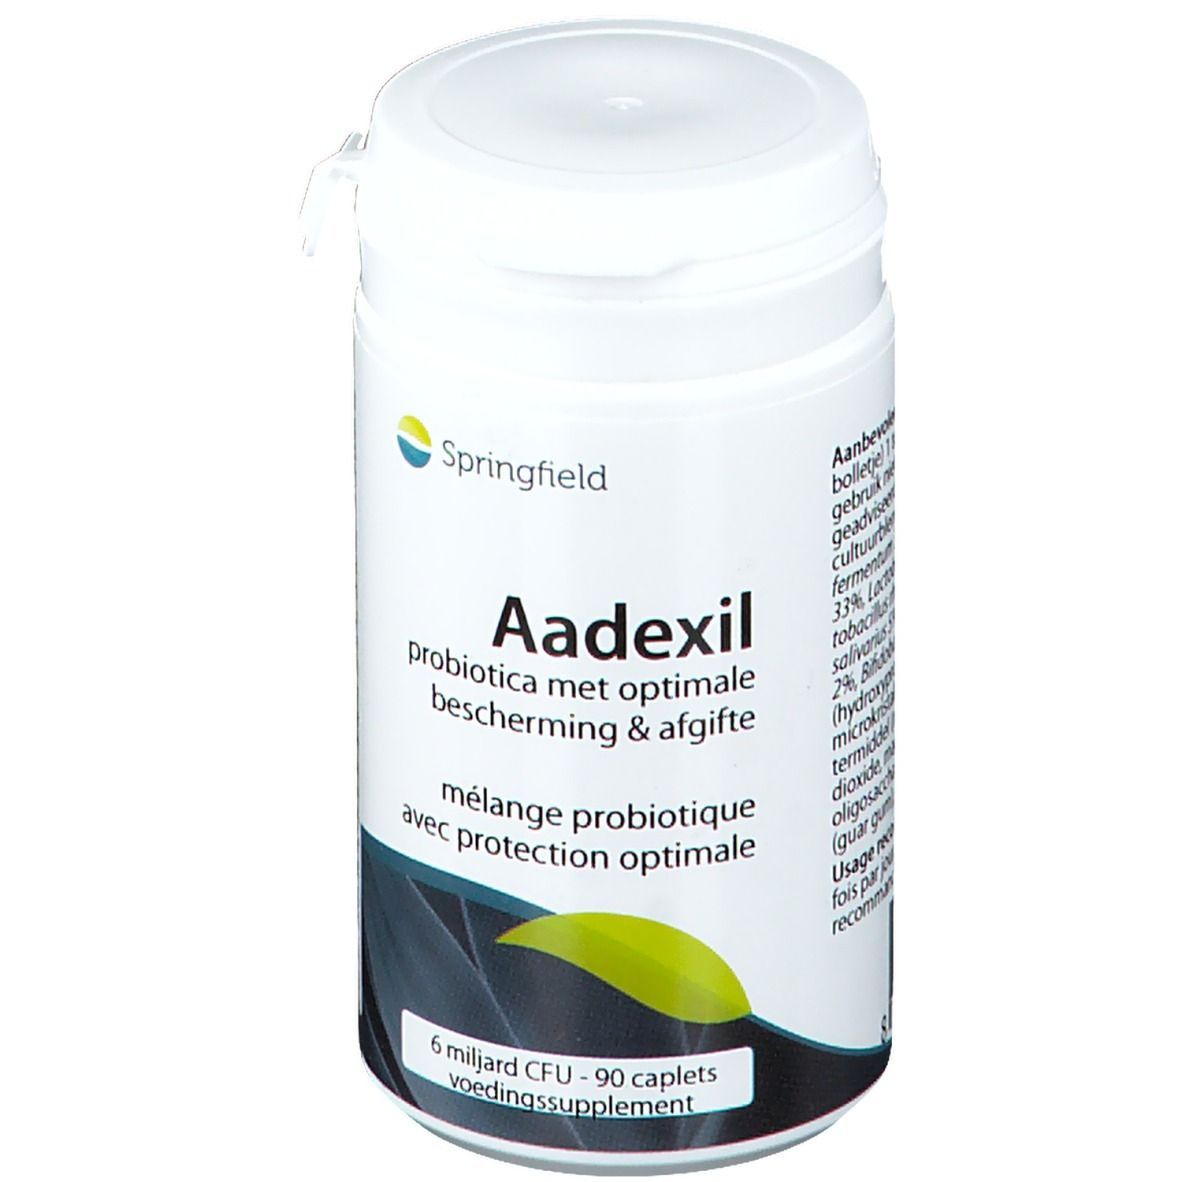 Sprinfield Aadexil